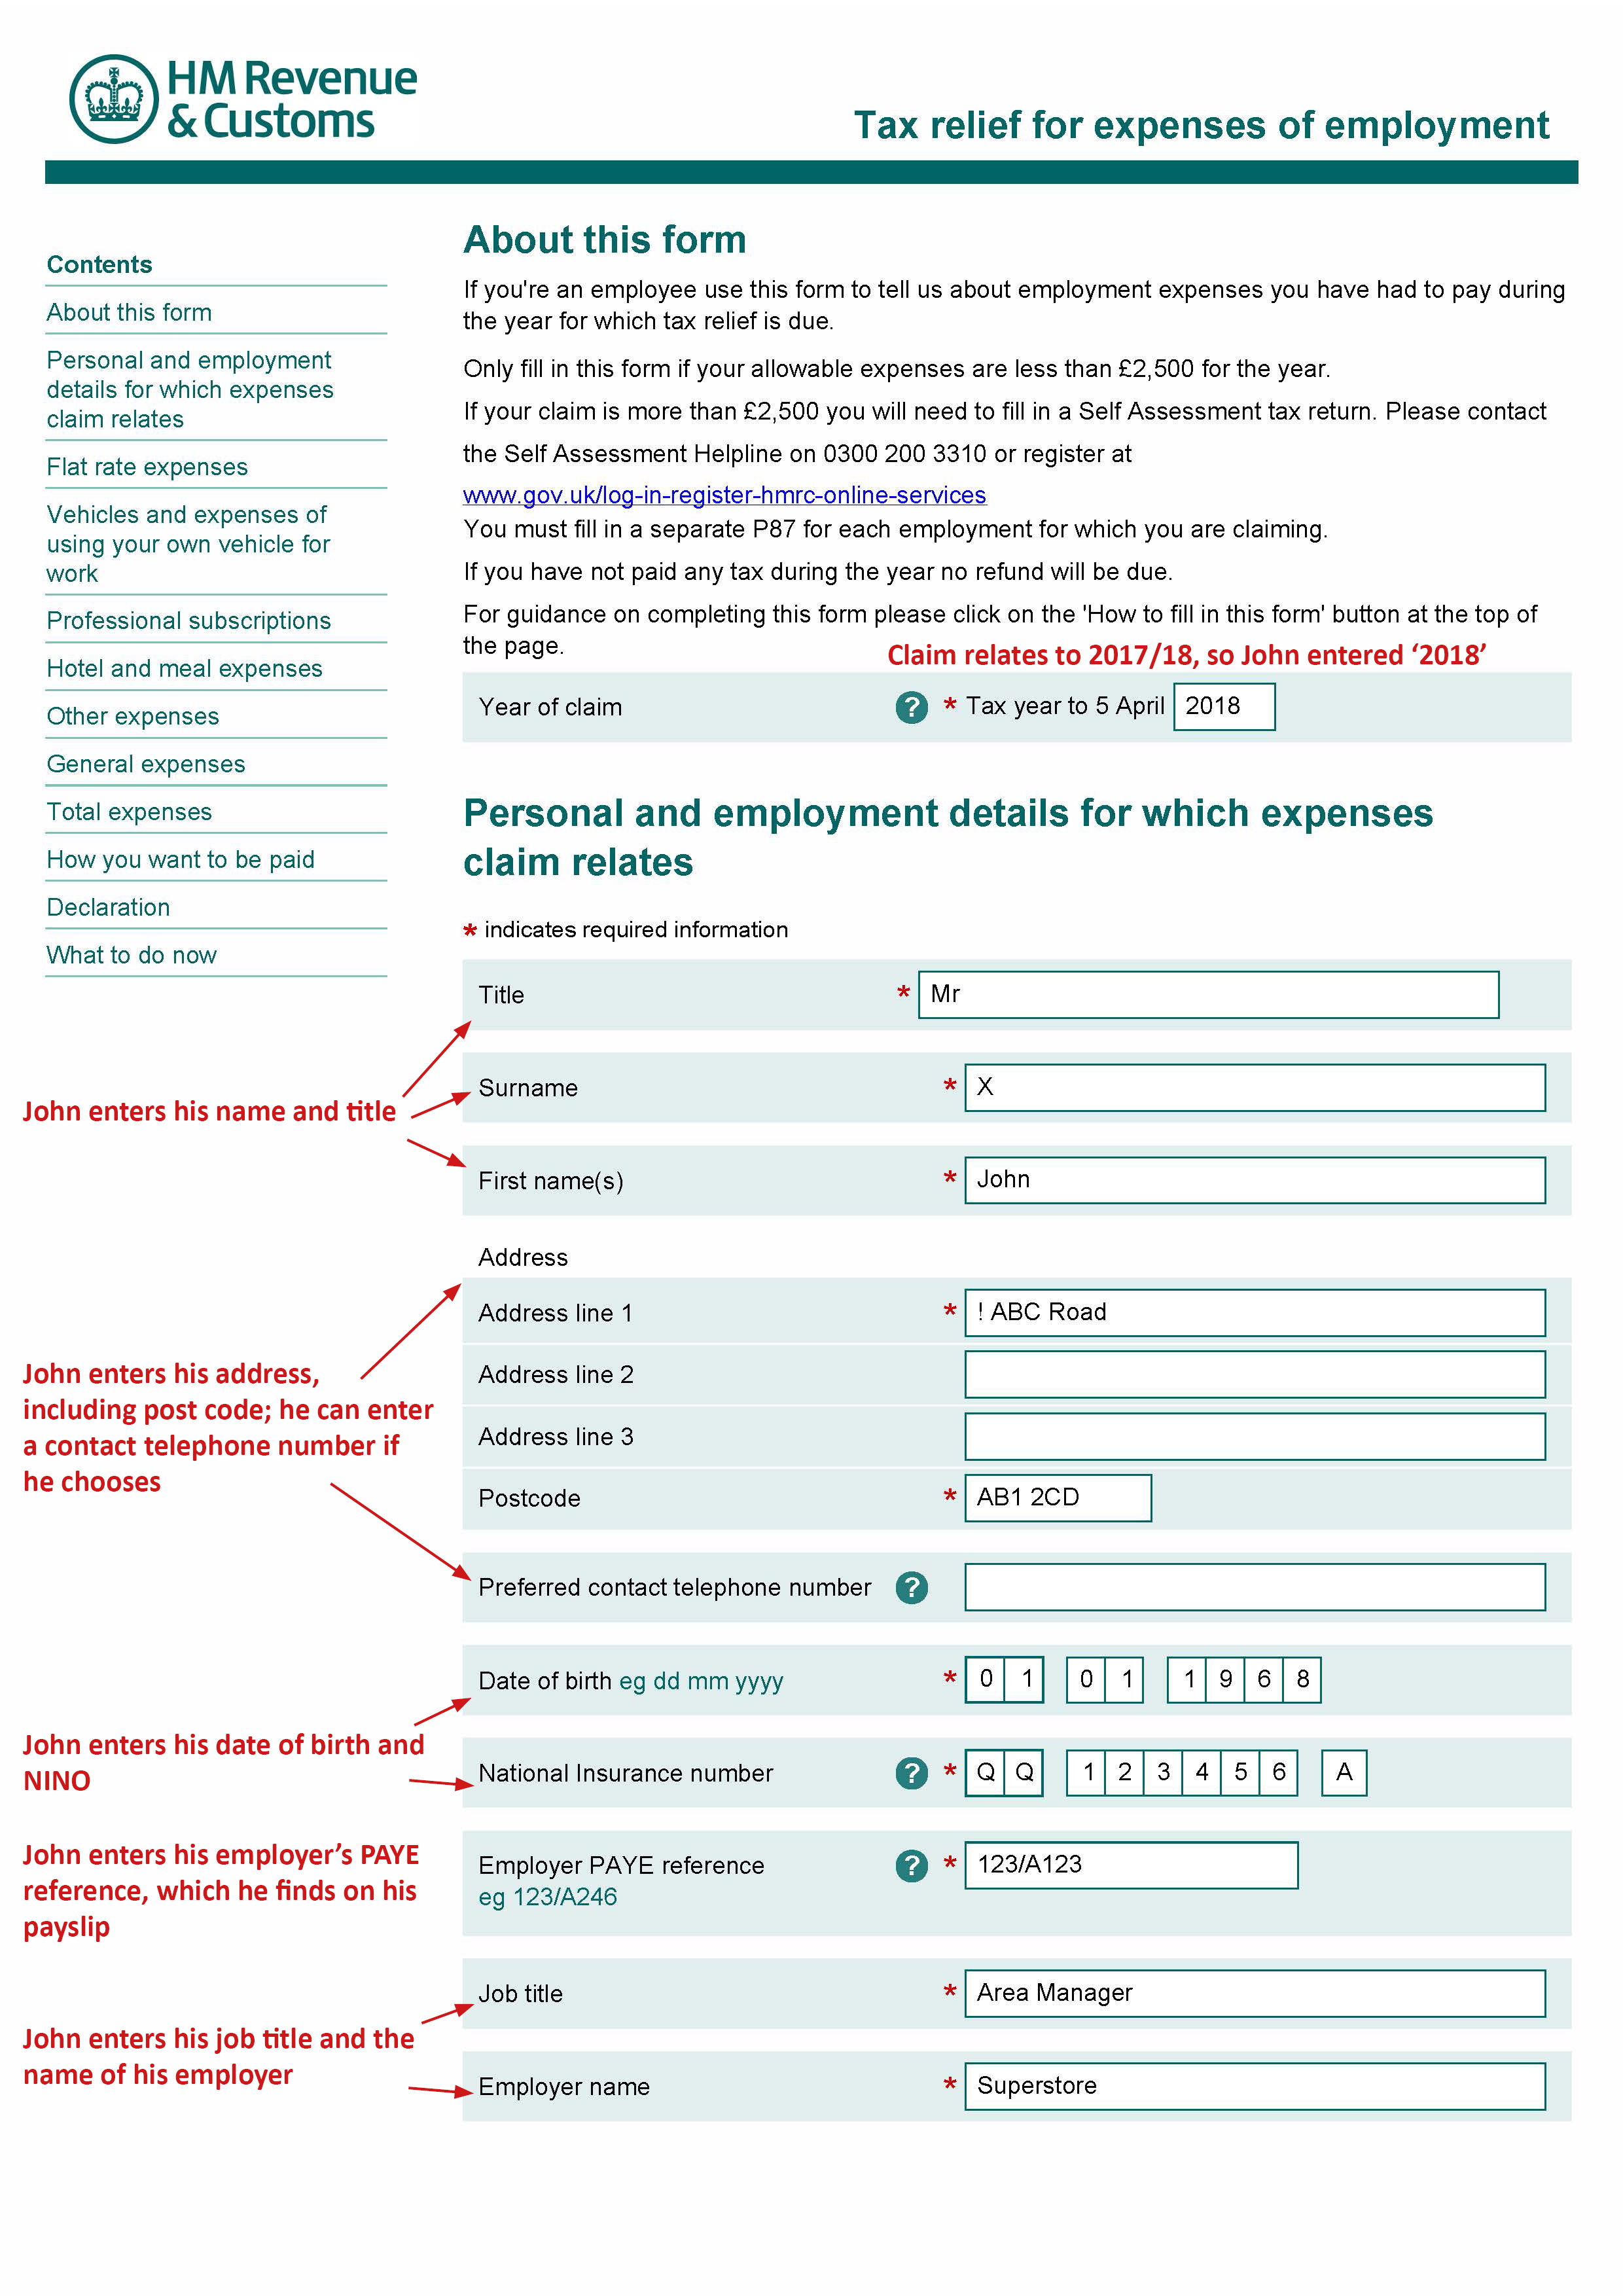 hmrc-gov-uk-forms-p87-pdf